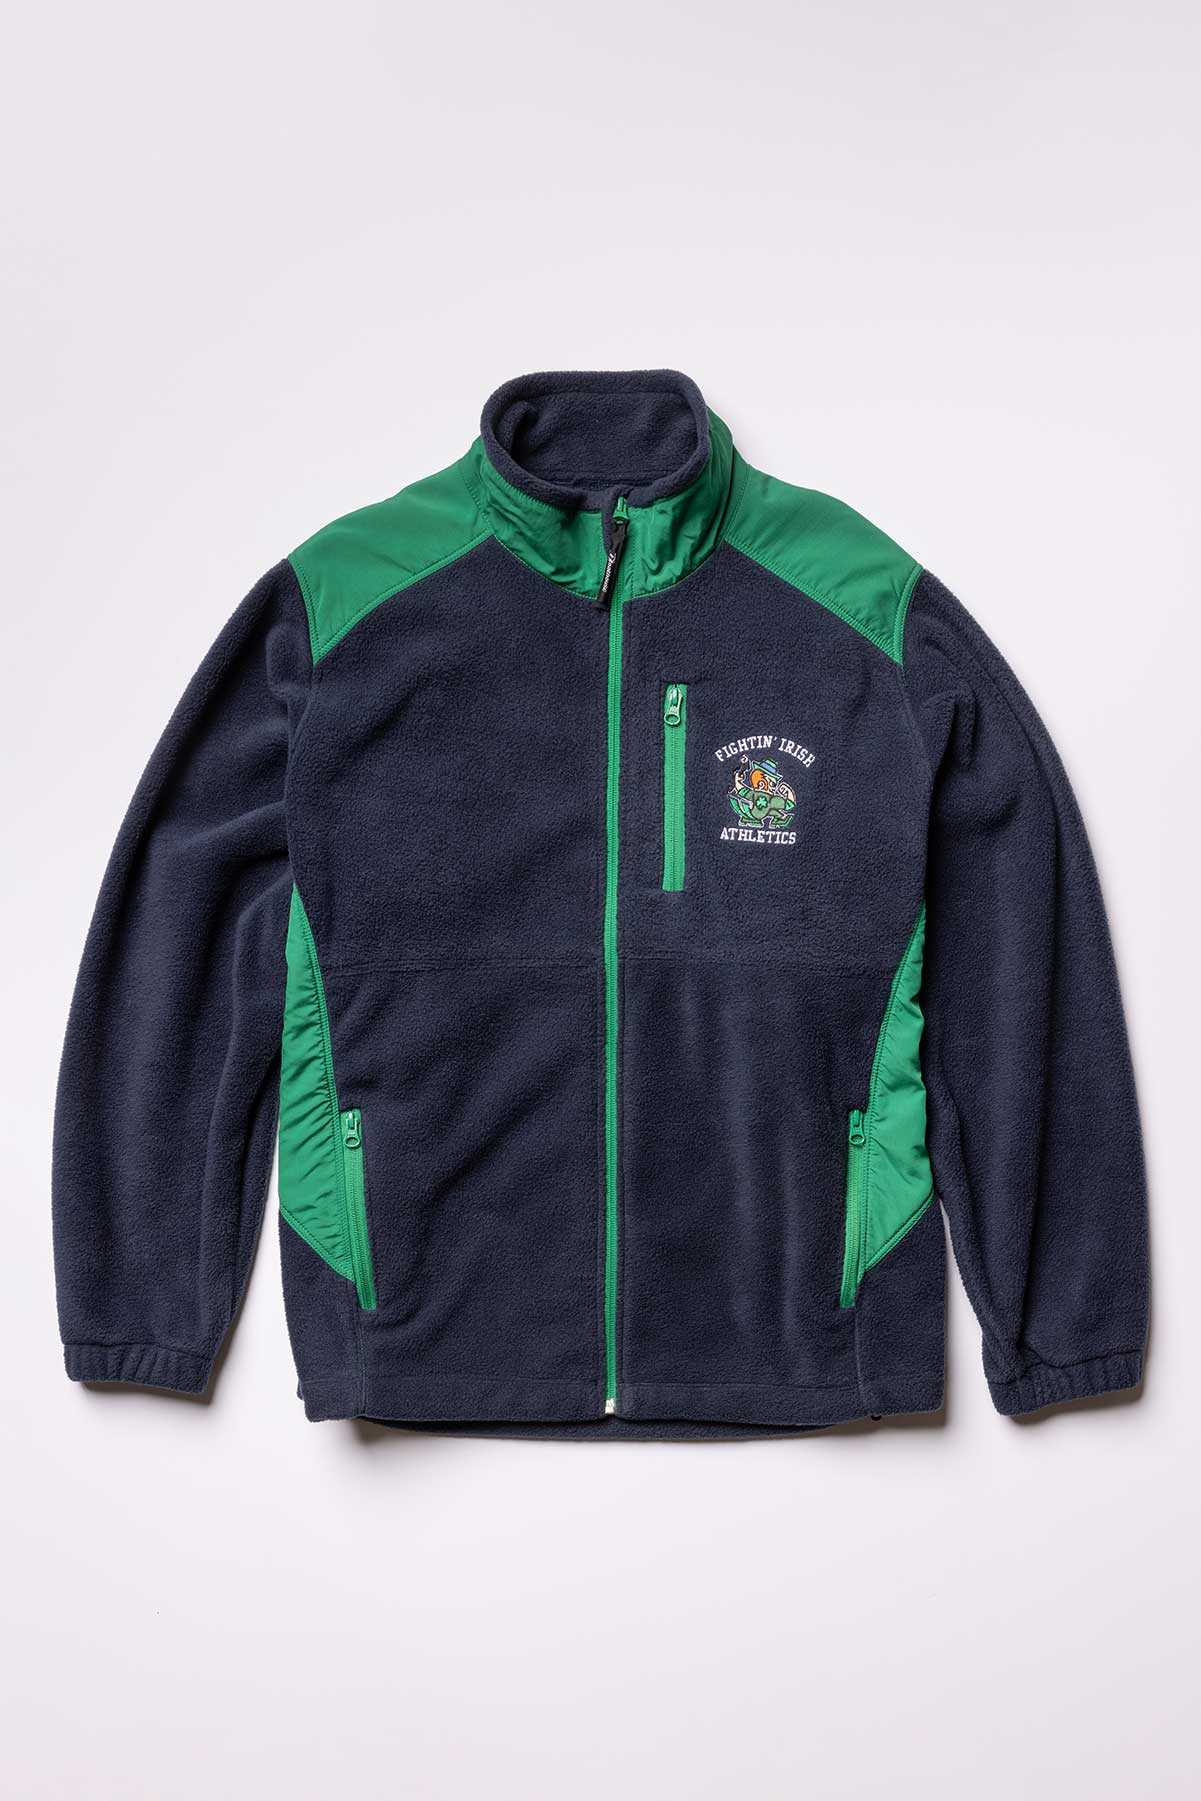 Fighting Irish Athletics Tech Fleece Jacket Large